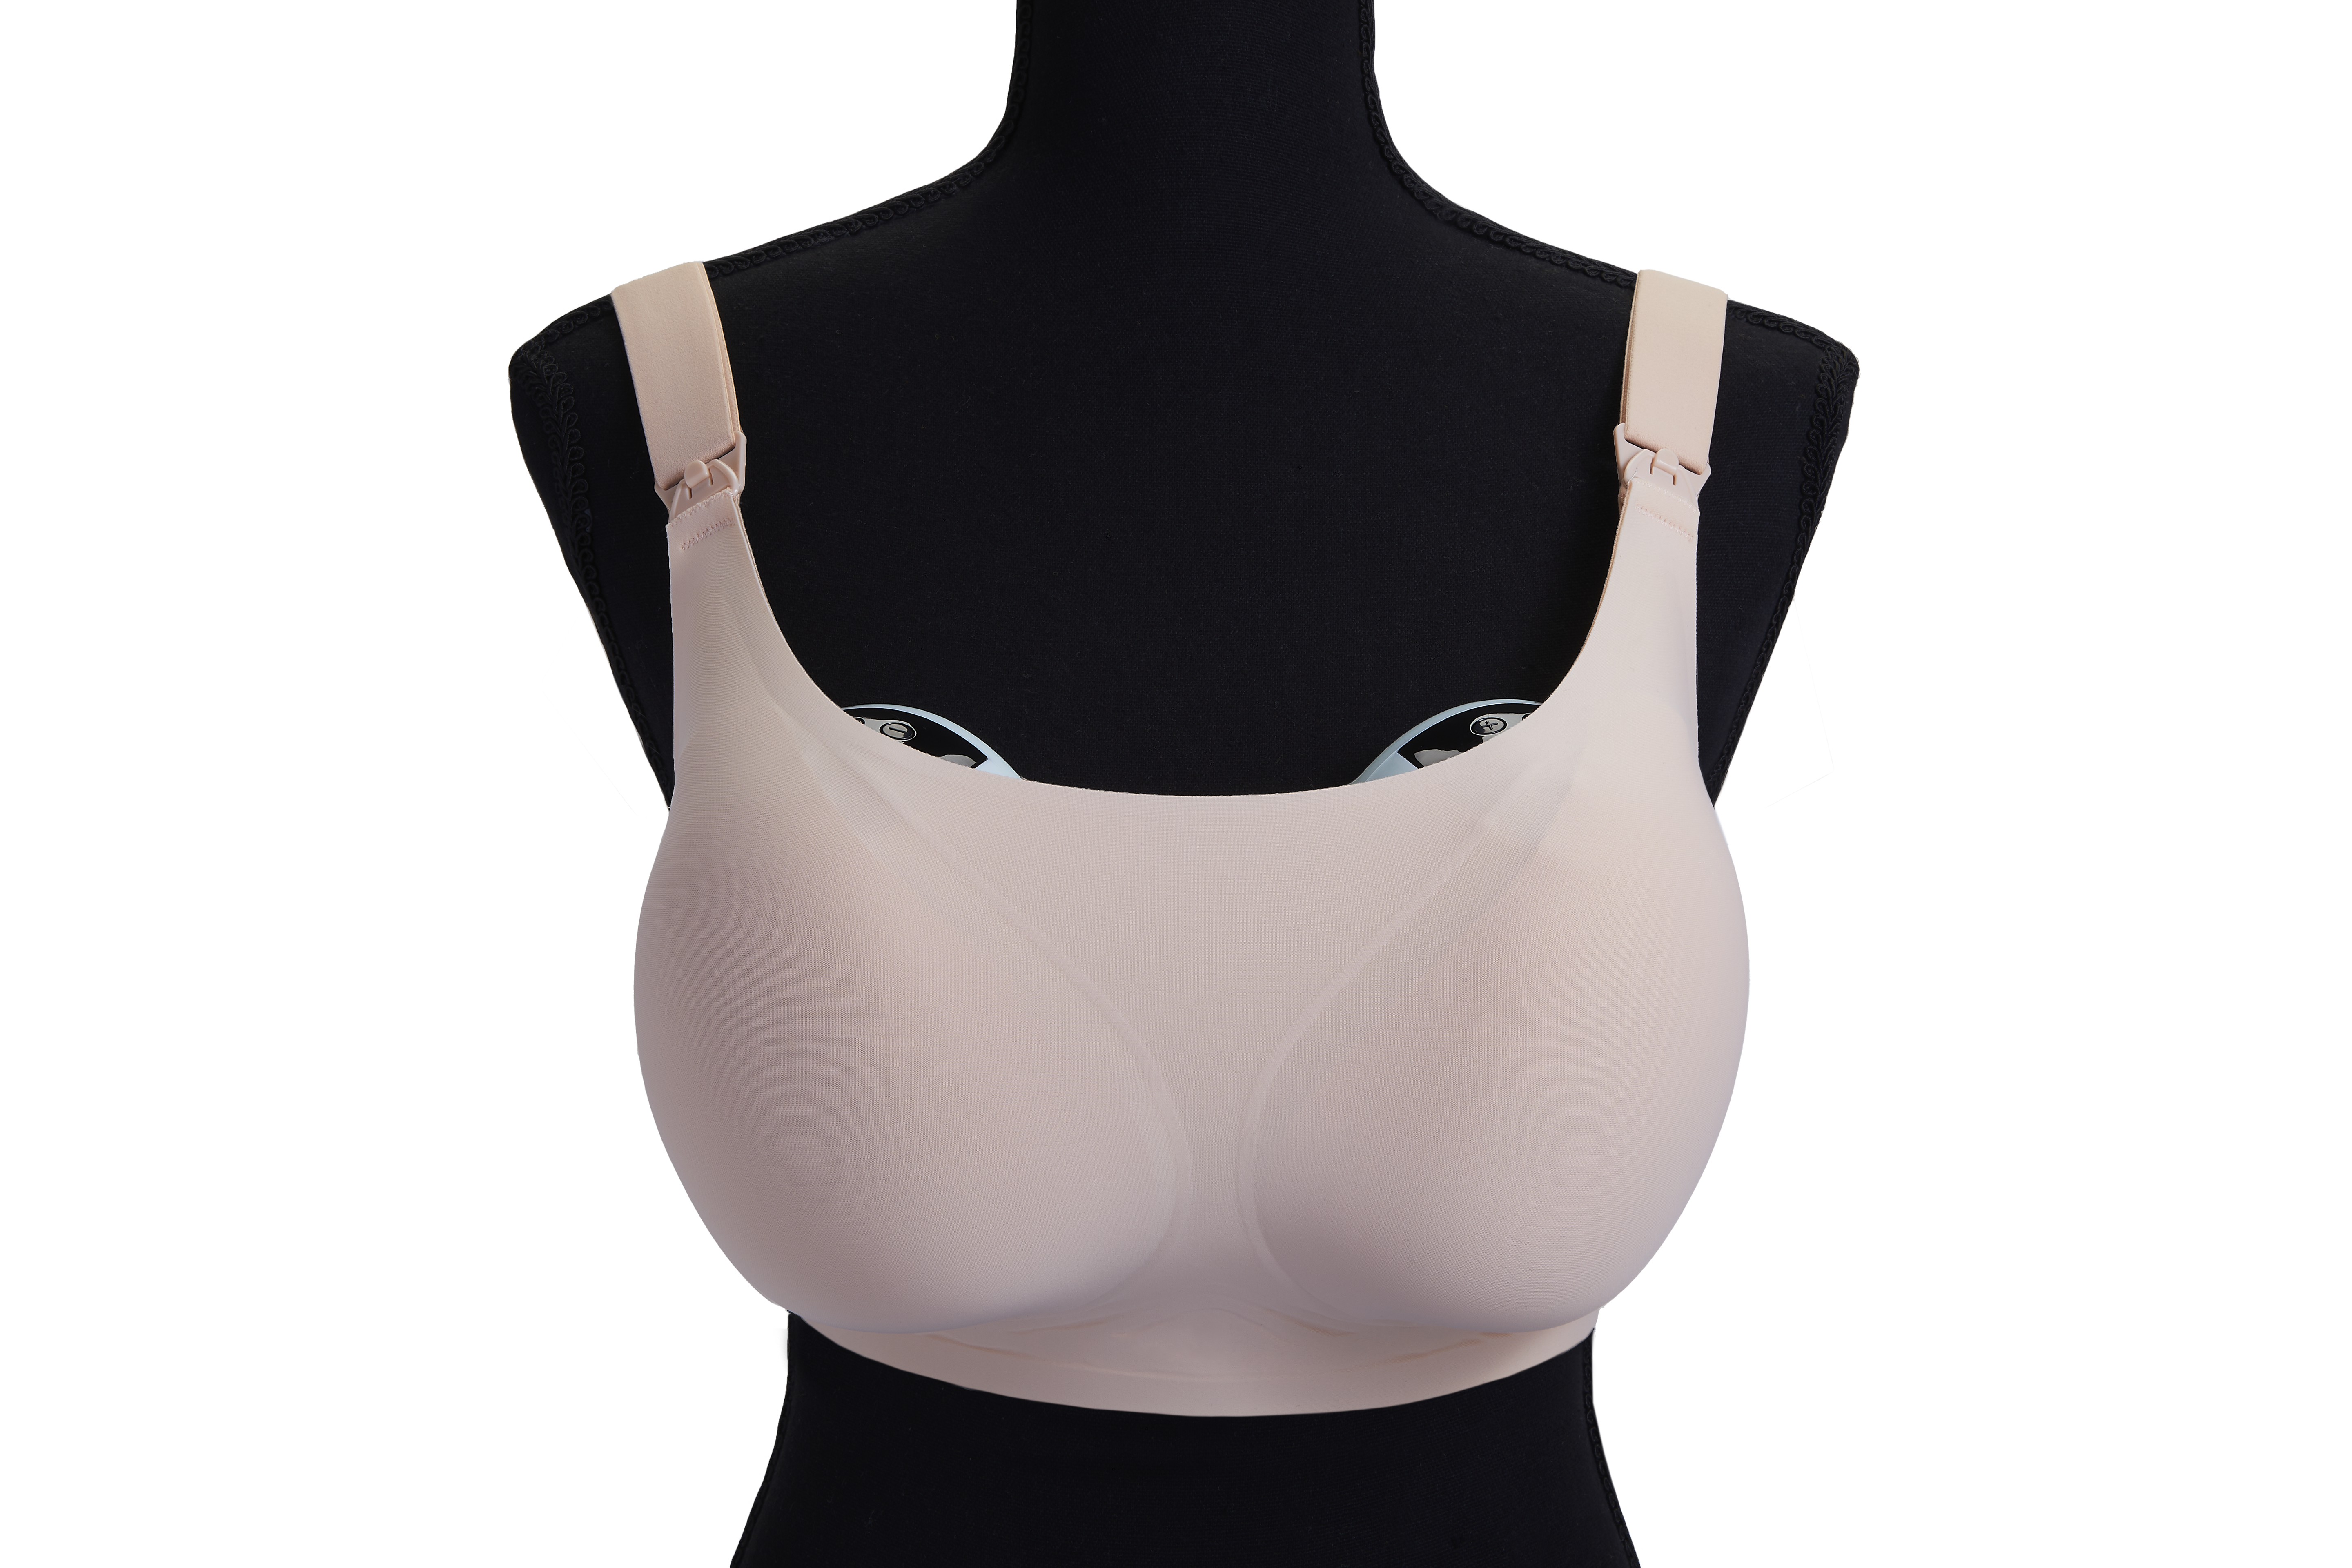 Buy Zoylink Women's Hands-Free Soft Nursing Breast Pump Bra (Black, Large)  at